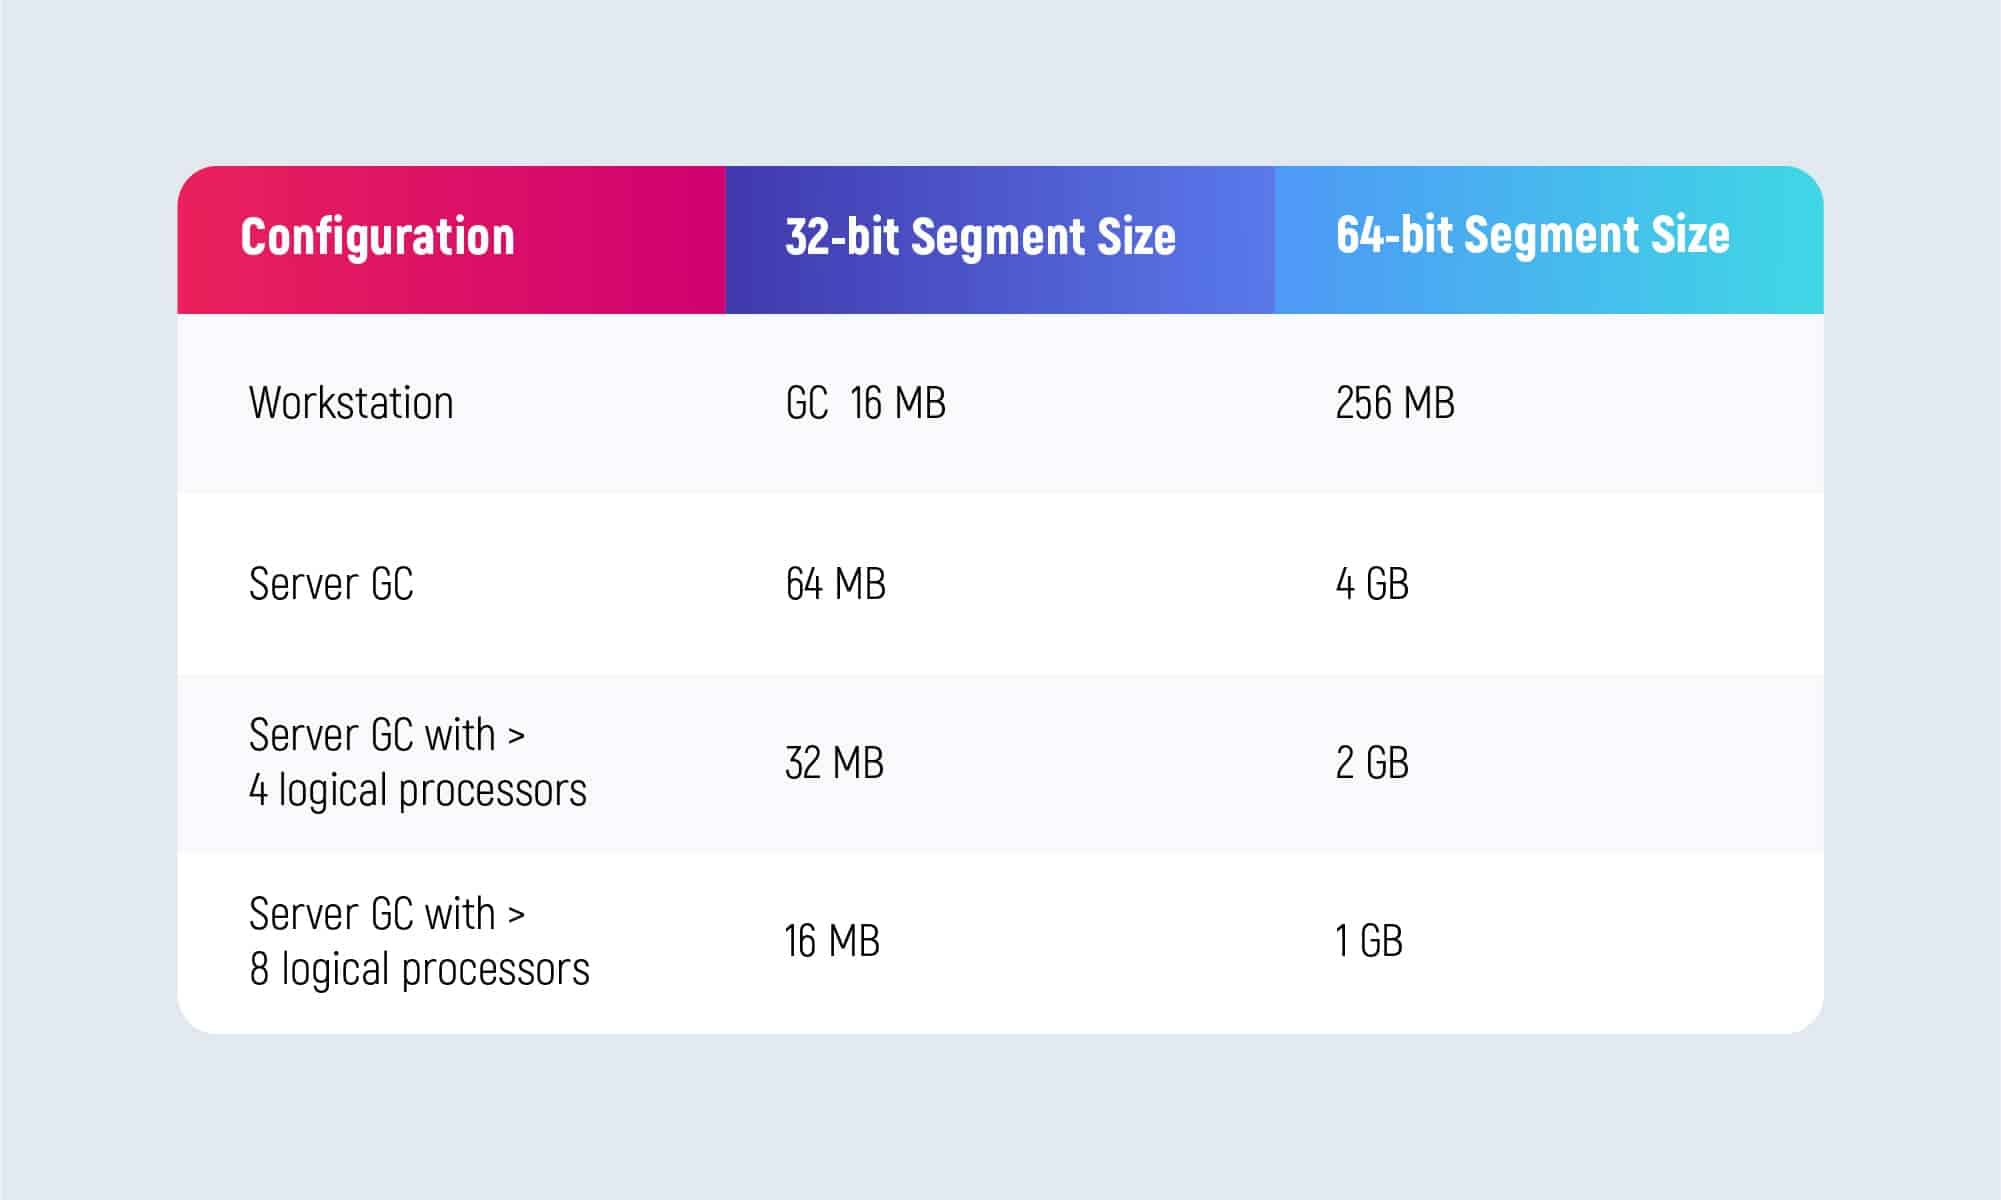 size segments depending on configuration and hardware platform